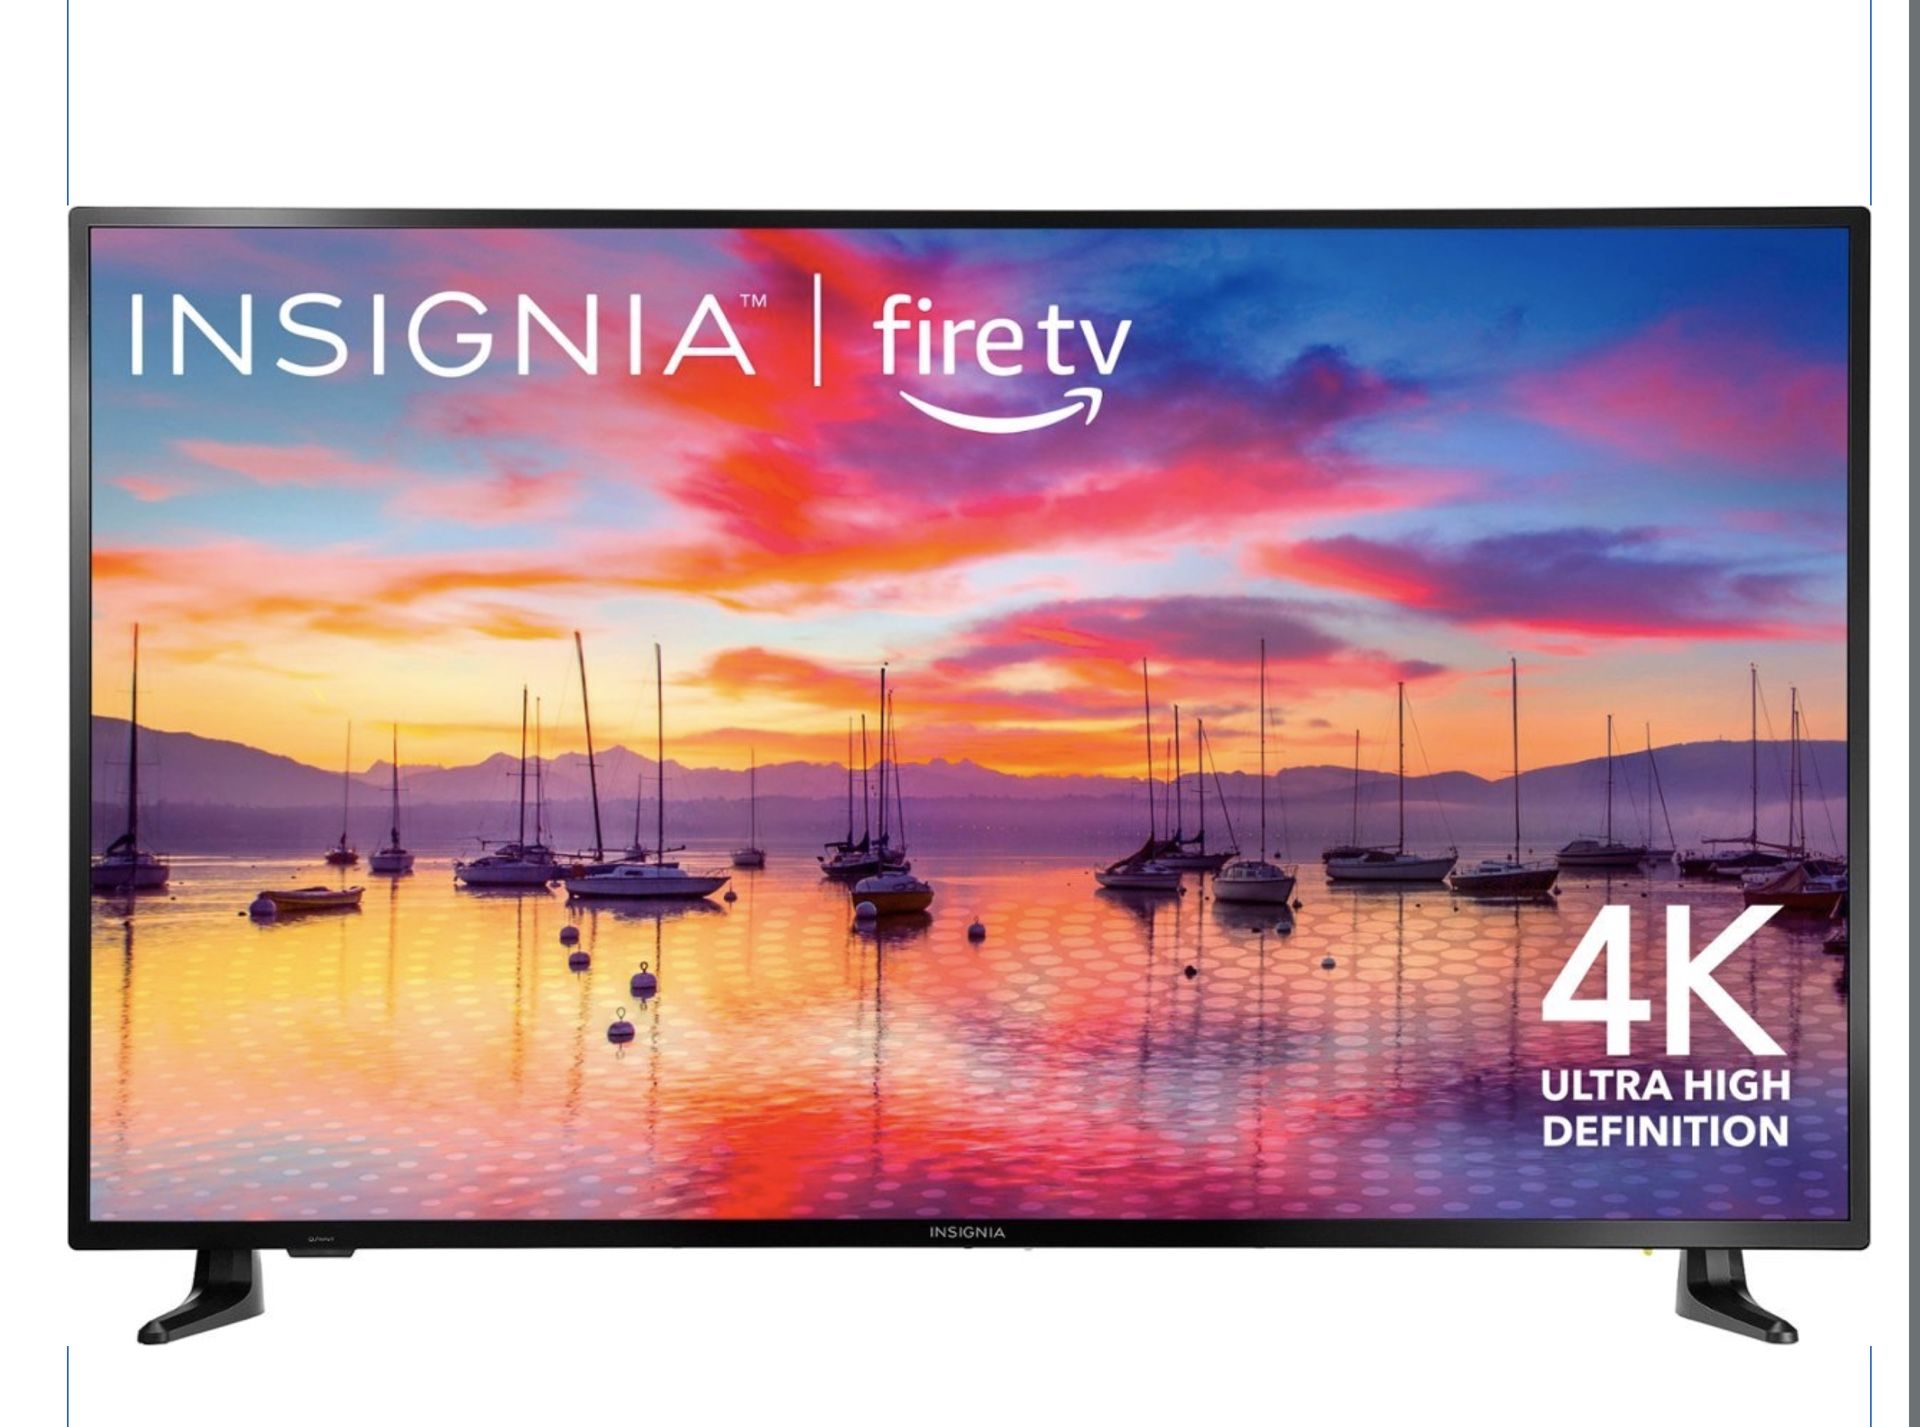 Insignia™ - 55" Class F30 Series LED 4K UHD Smart Fire TV